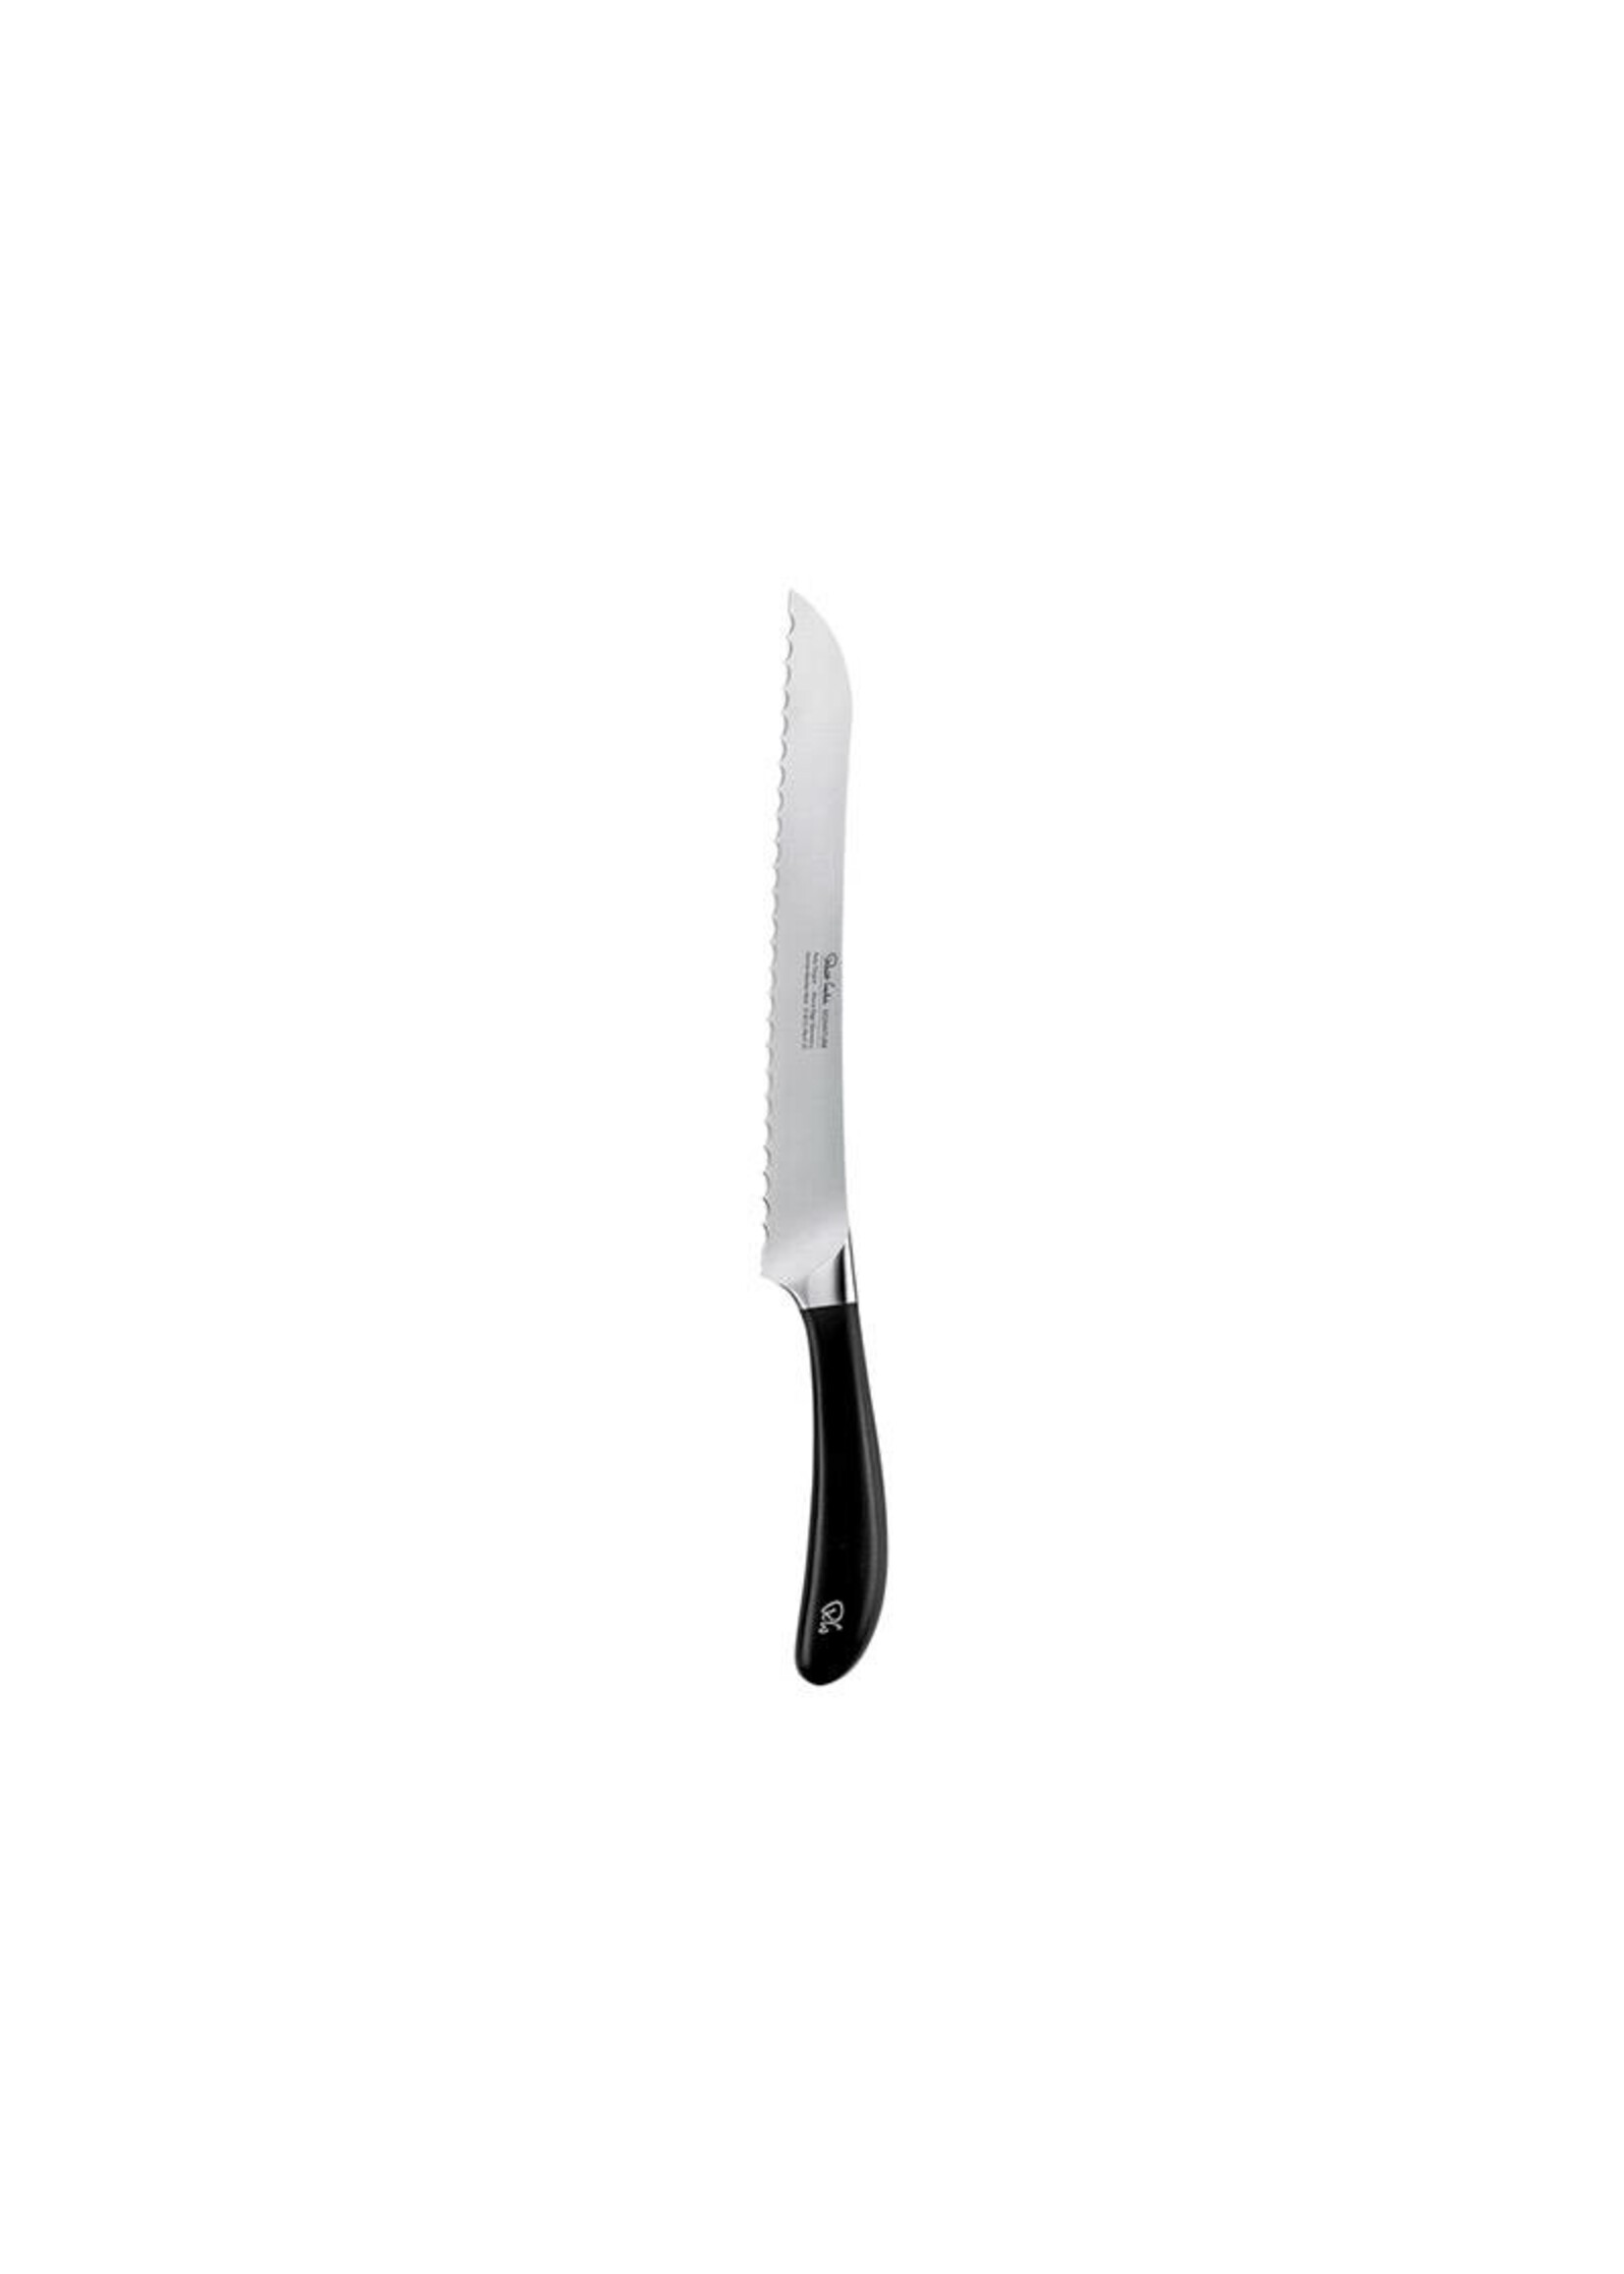 Robert Welch Signature Bread Knife 22 cm